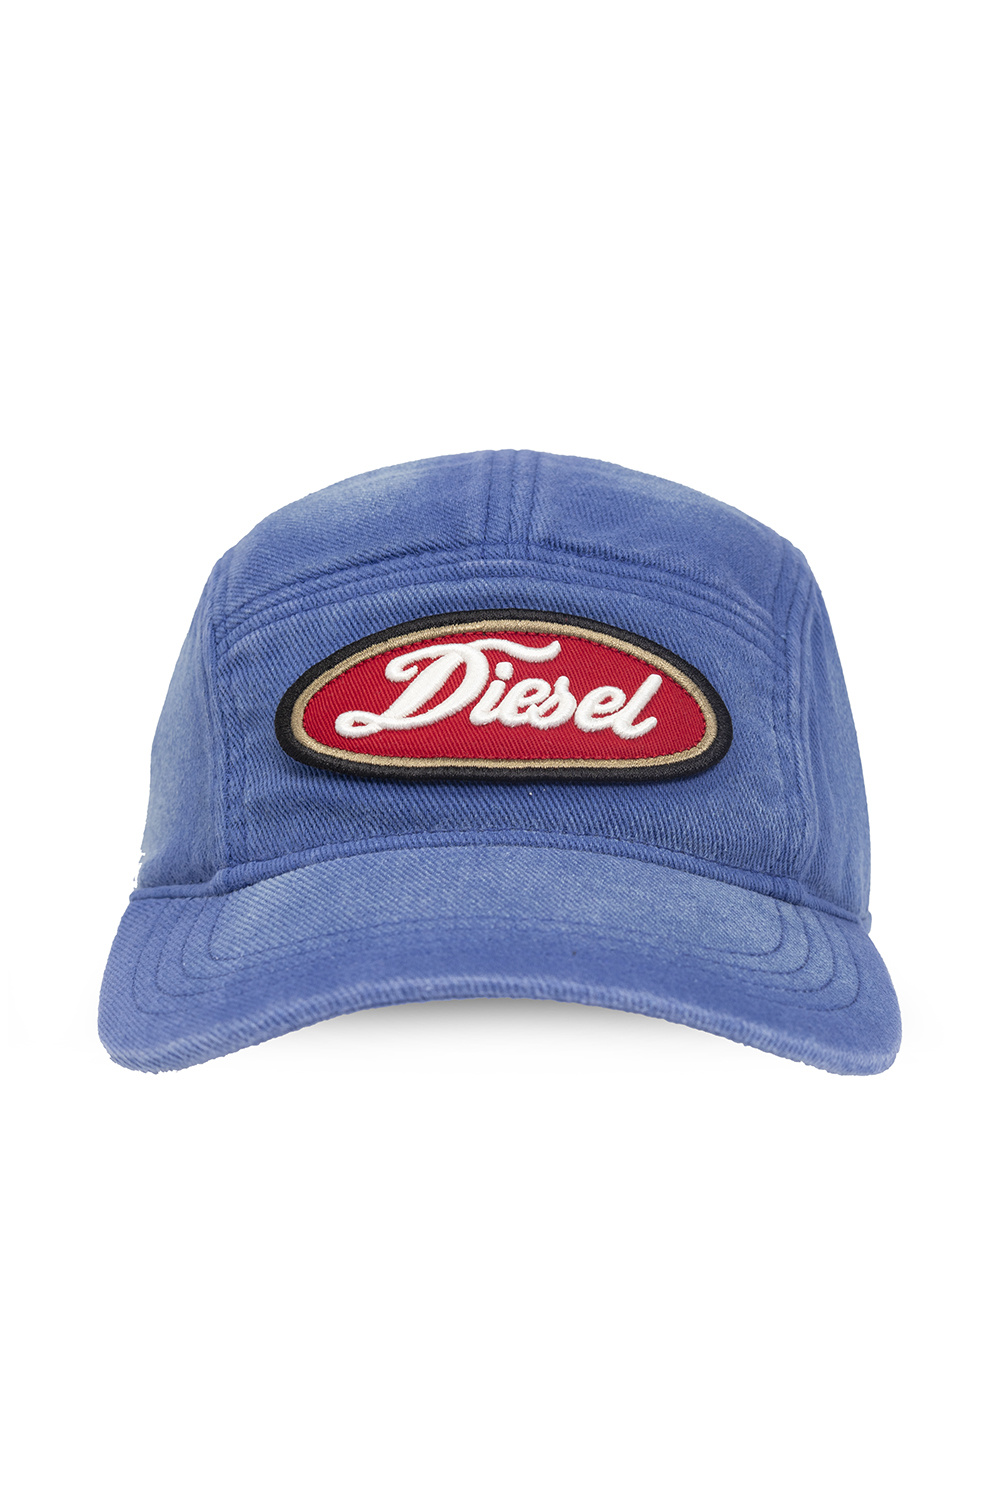 Diesel 'C-SINDRE' baseball cap